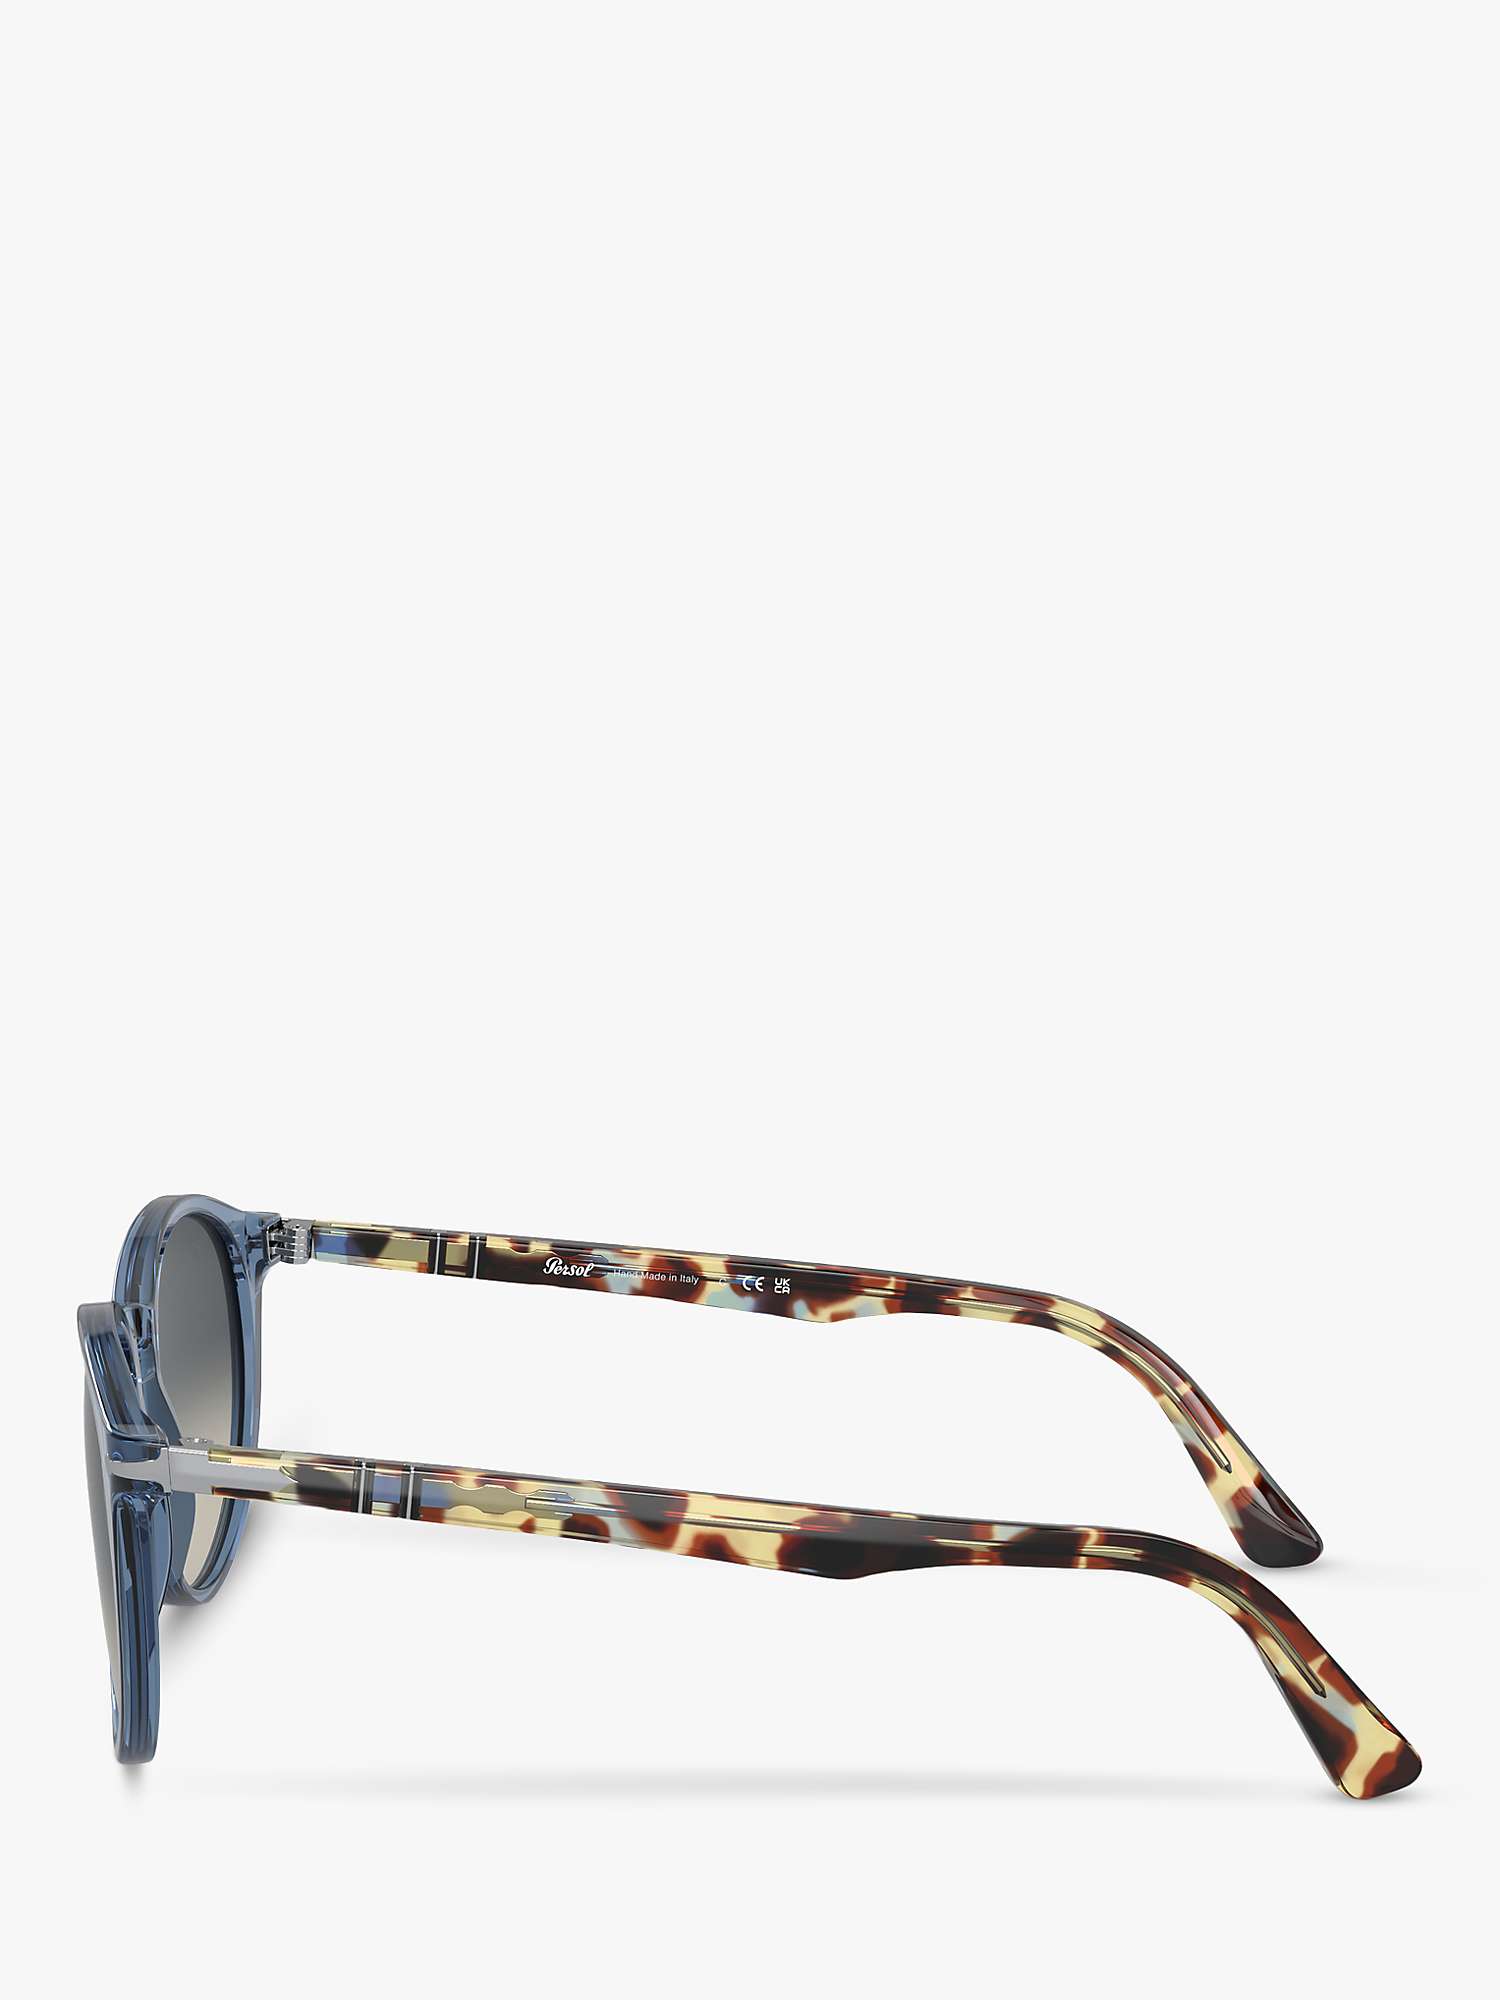 Buy Persol PO3152S Men's Phantos Sunglasses, Transparent Navy/Black Gradient Online at johnlewis.com